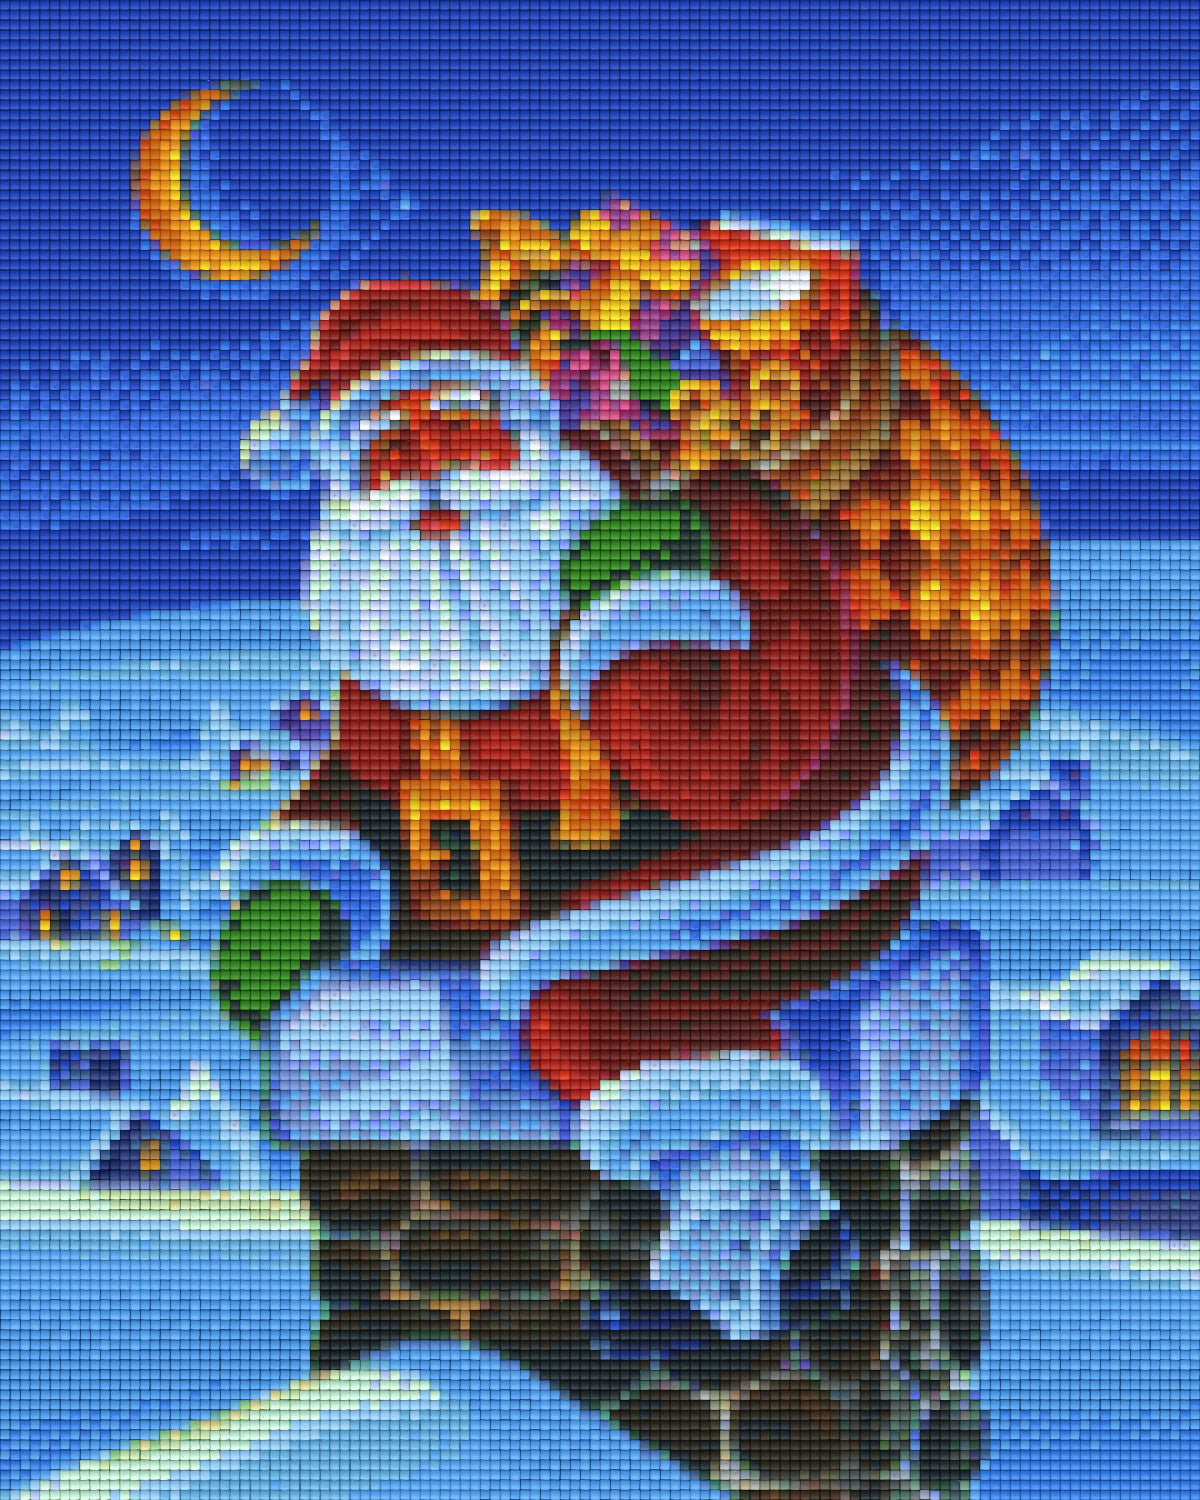 Pixelhobby classic set - Santa Claus in the chimney